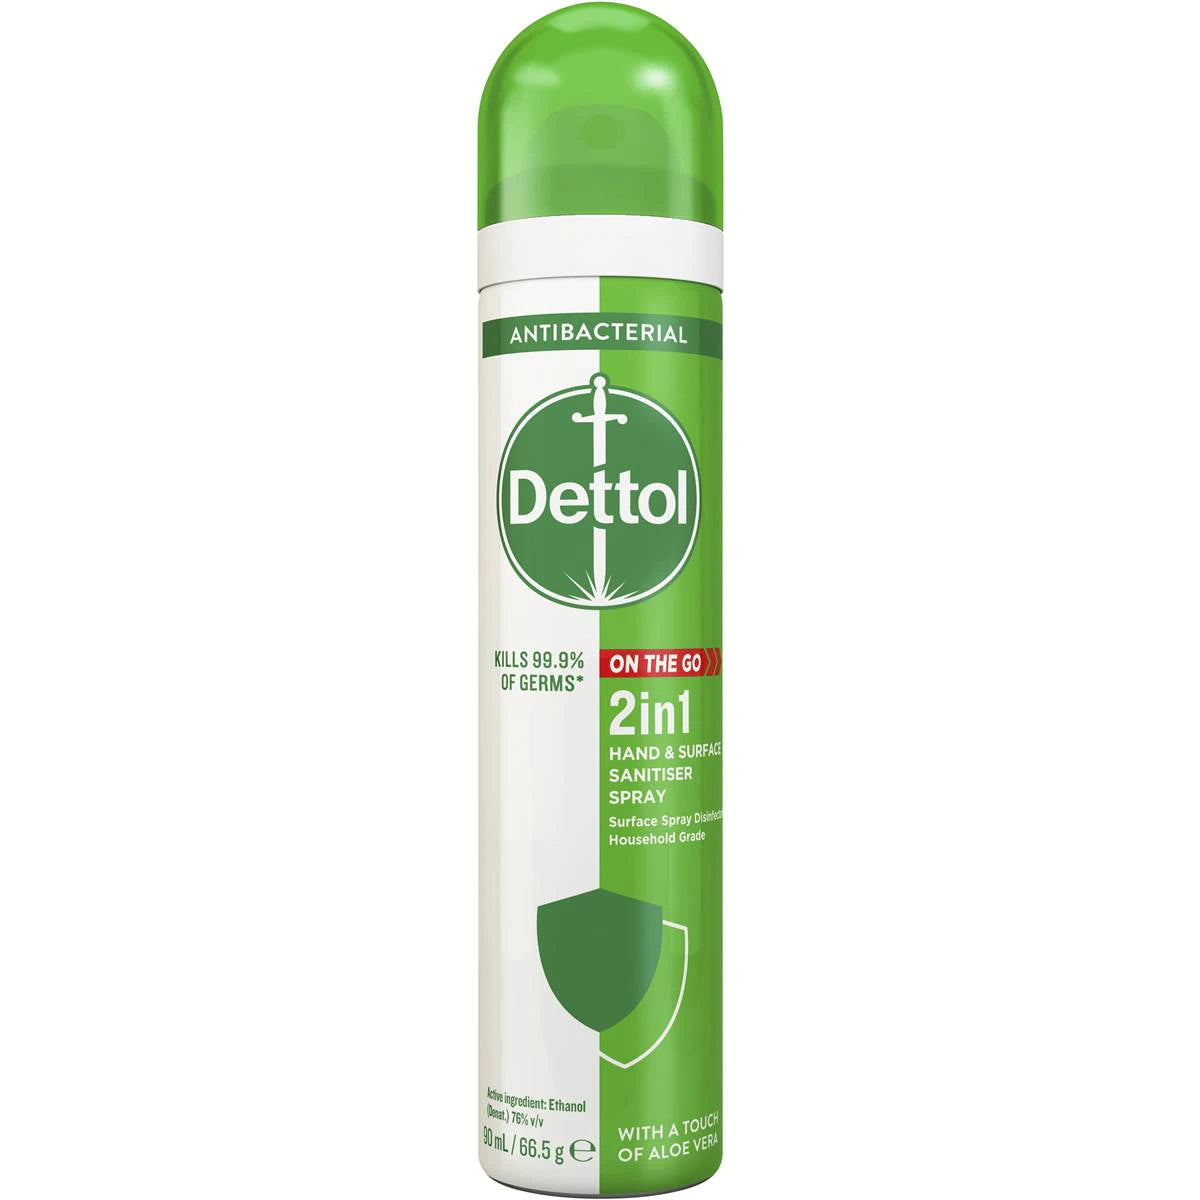 Dettol Antibacterial 2-in-1 Hand & Surface Sanitiser Spray 90ml